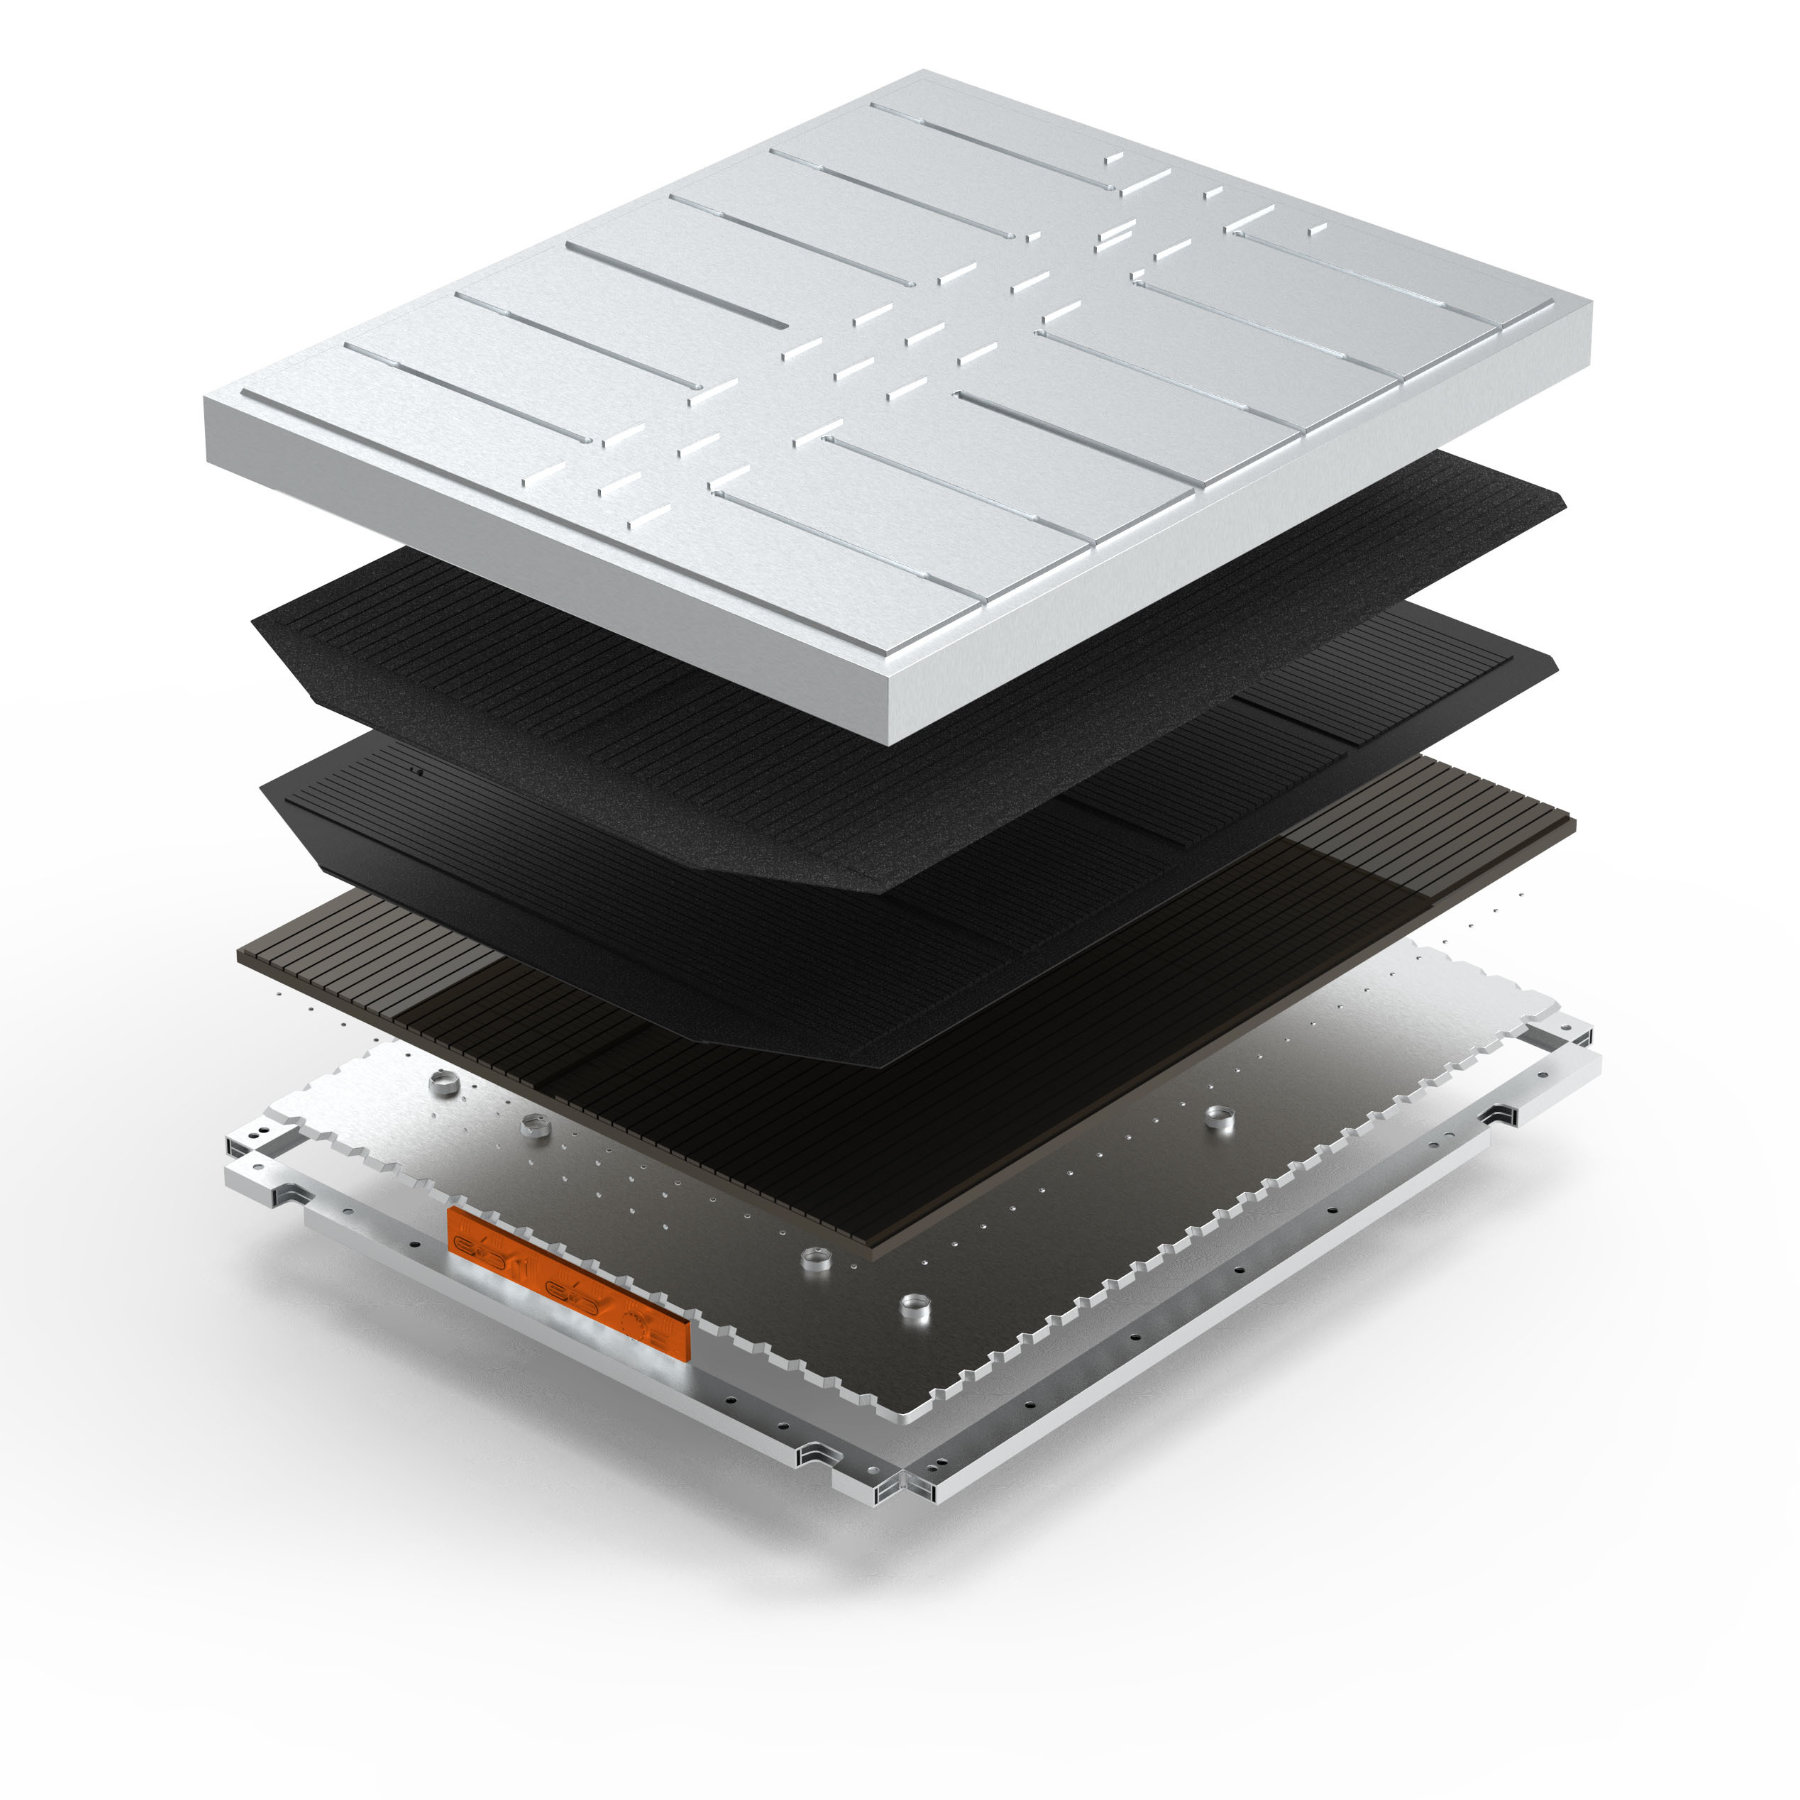 Sono Motors’ solar Sion gets larger battery